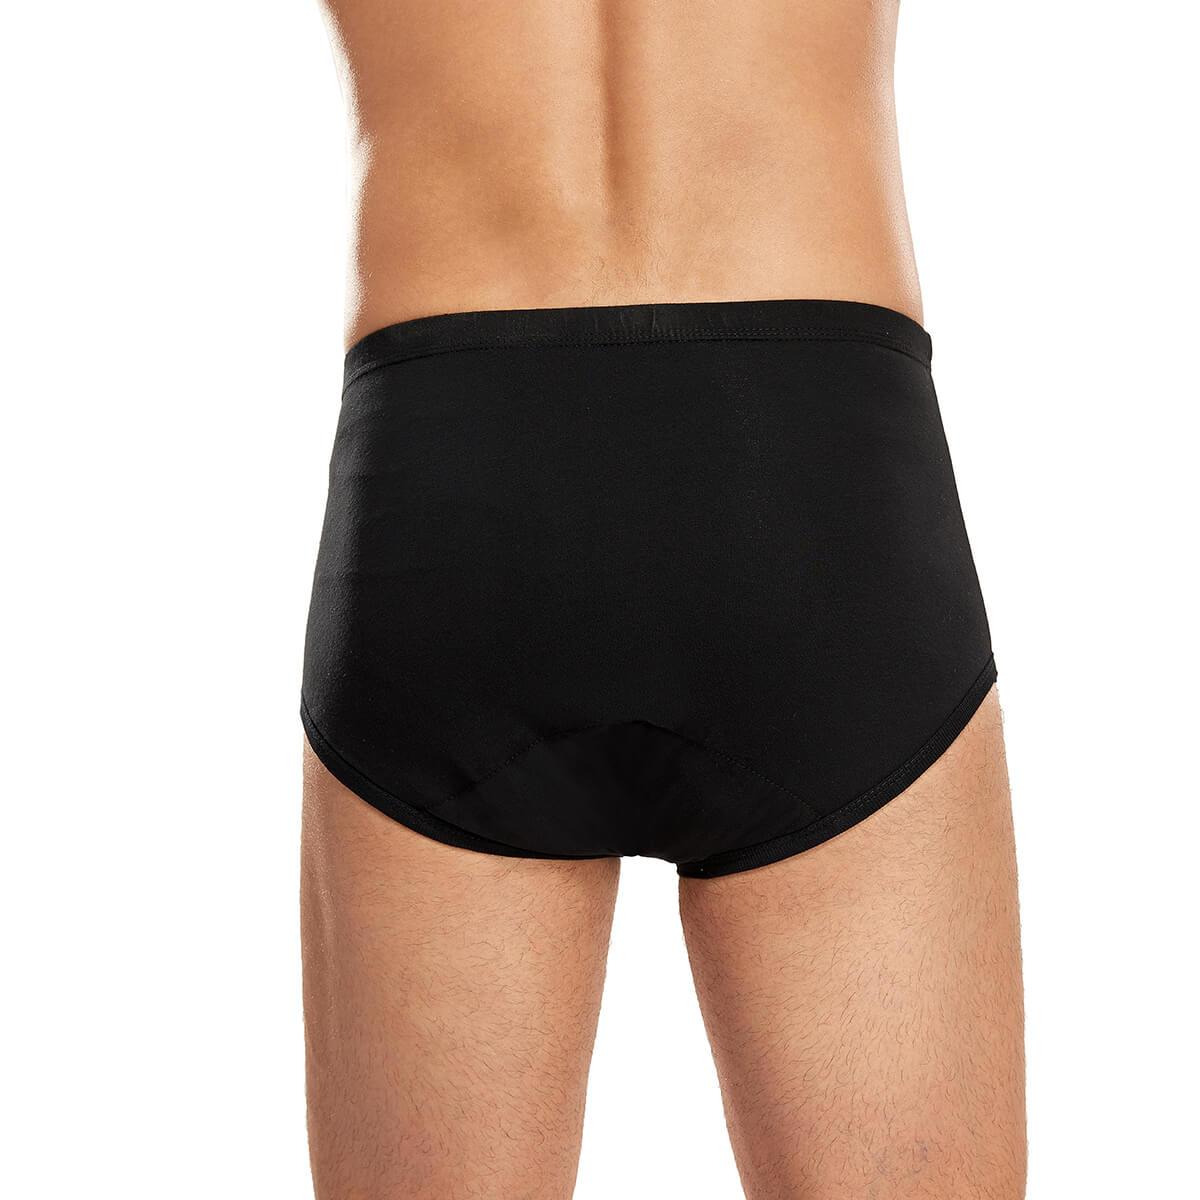 Mens Leak Proof Underwear  Washable & Reusable Briefs for Bladder